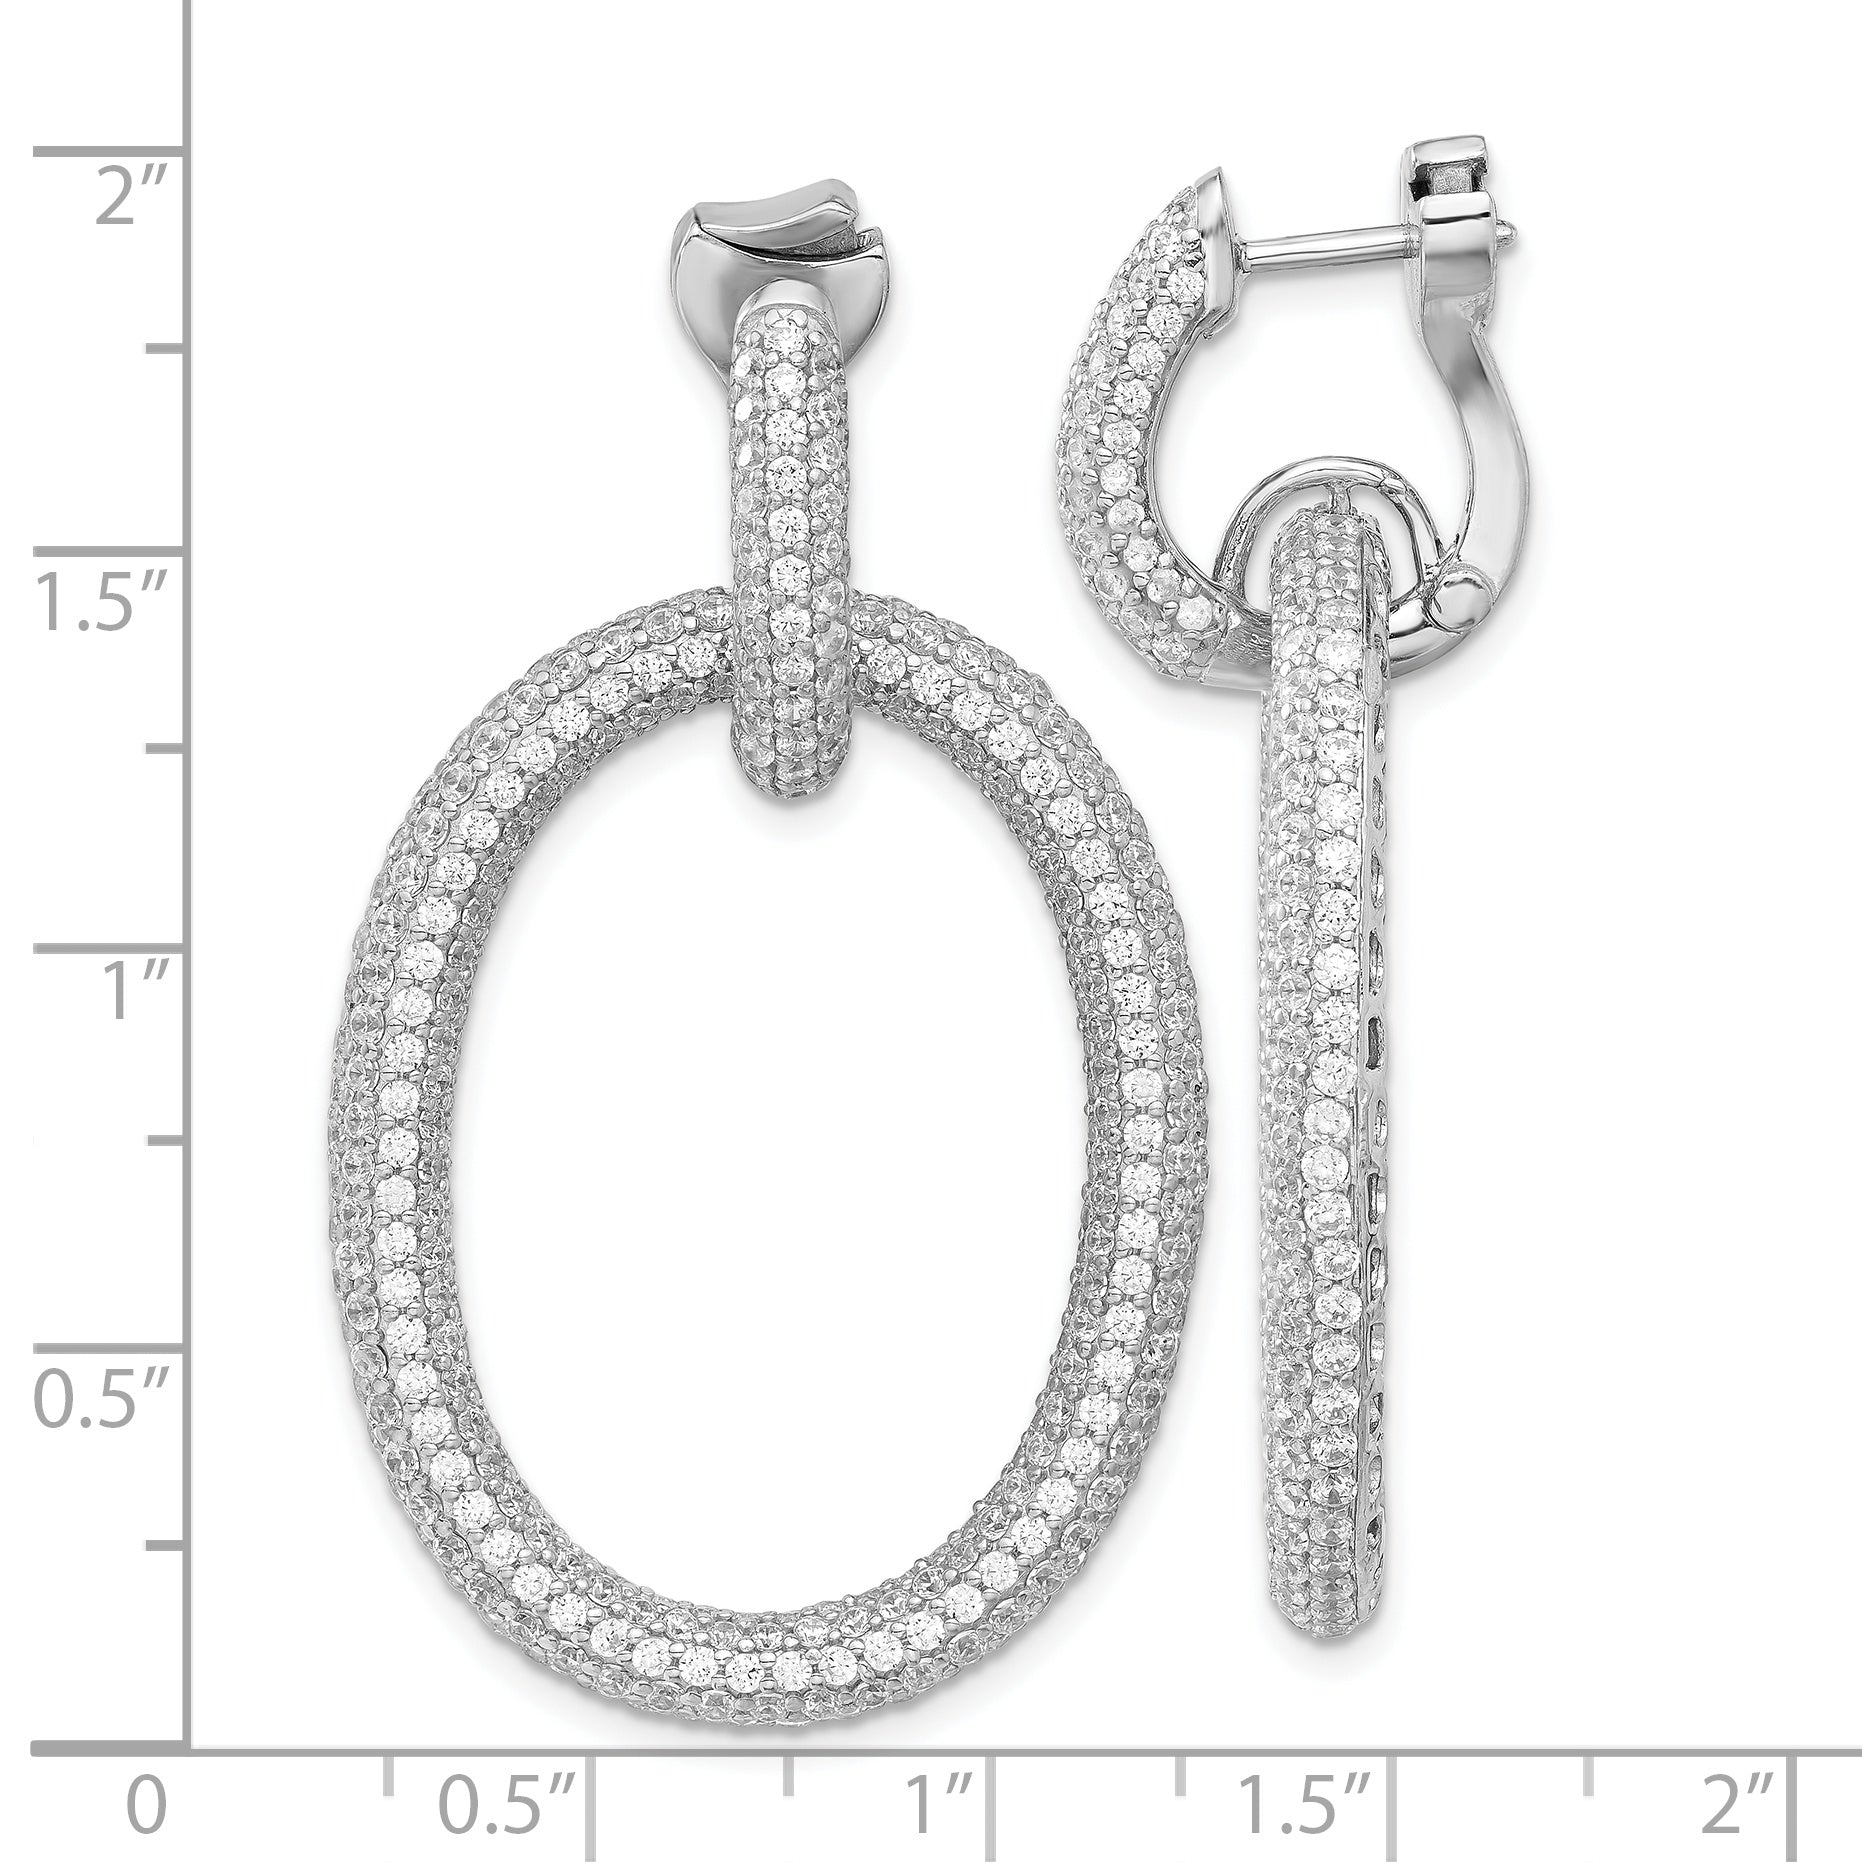 Sterling Silver Rhodium-plated CZ Oval Hinged Hoop Dangle Earrings